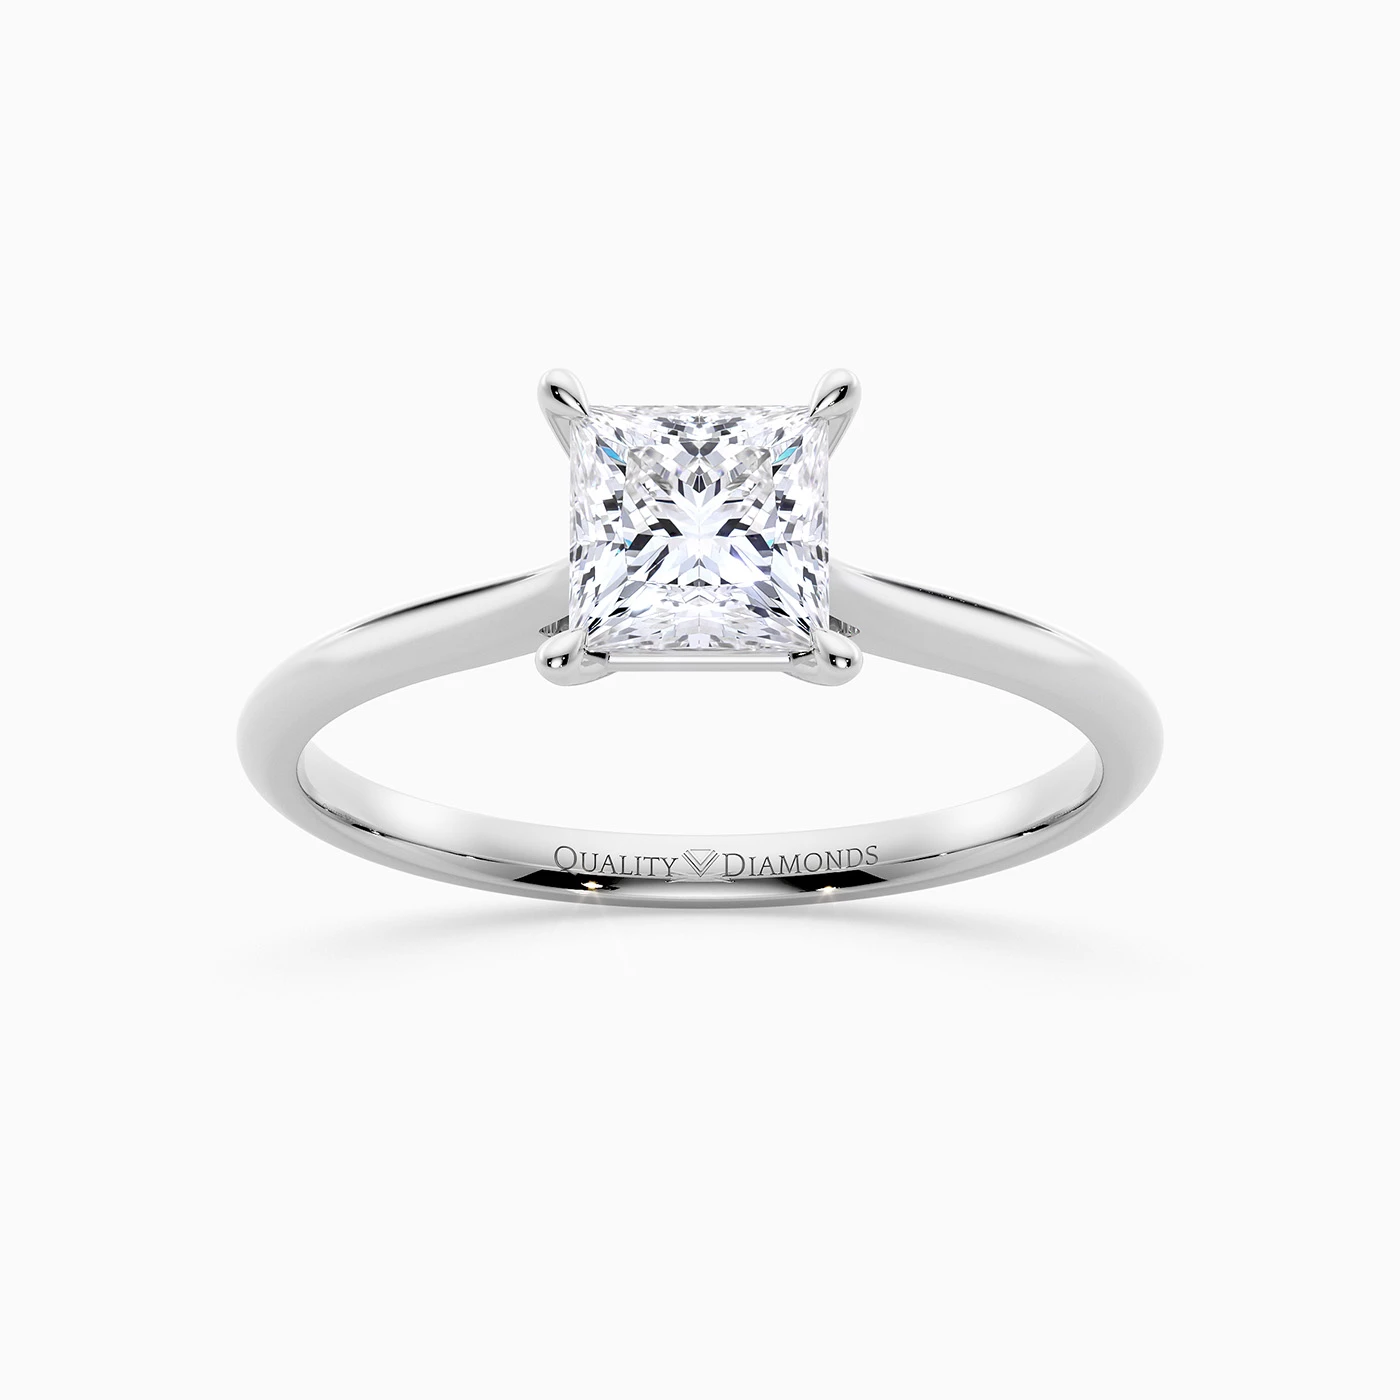 Princess Carys Diamond Ring in 9K White Gold